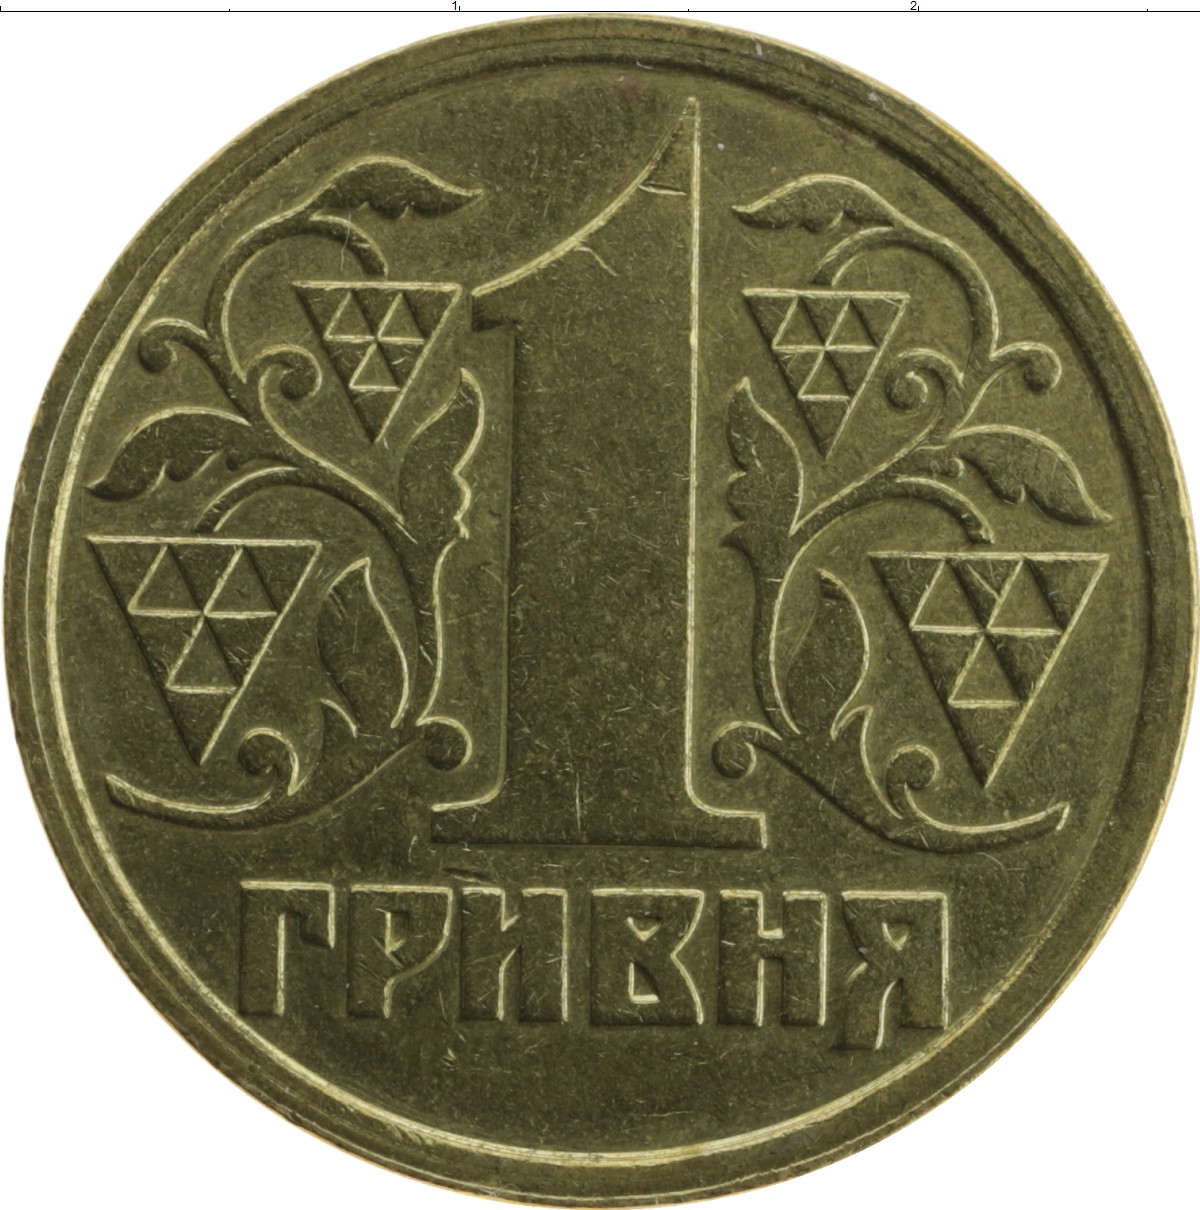 1 рубль гривни. 1 Гривна Украина. Монета Украина 1 гривна. Гривна 1996. Гривны 1996 года.